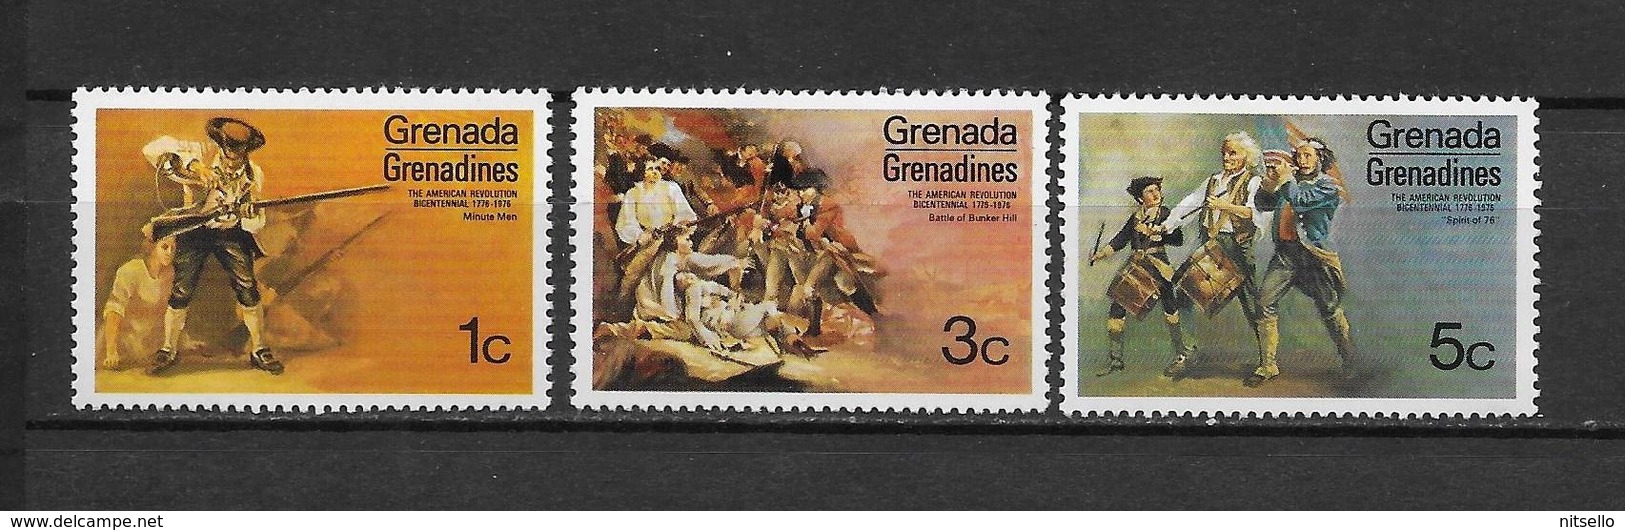 LOTE 1837  ///  GRENADA  **MNH  ¡¡¡¡ LIQUIDATION !!!! - Grenada (1974-...)